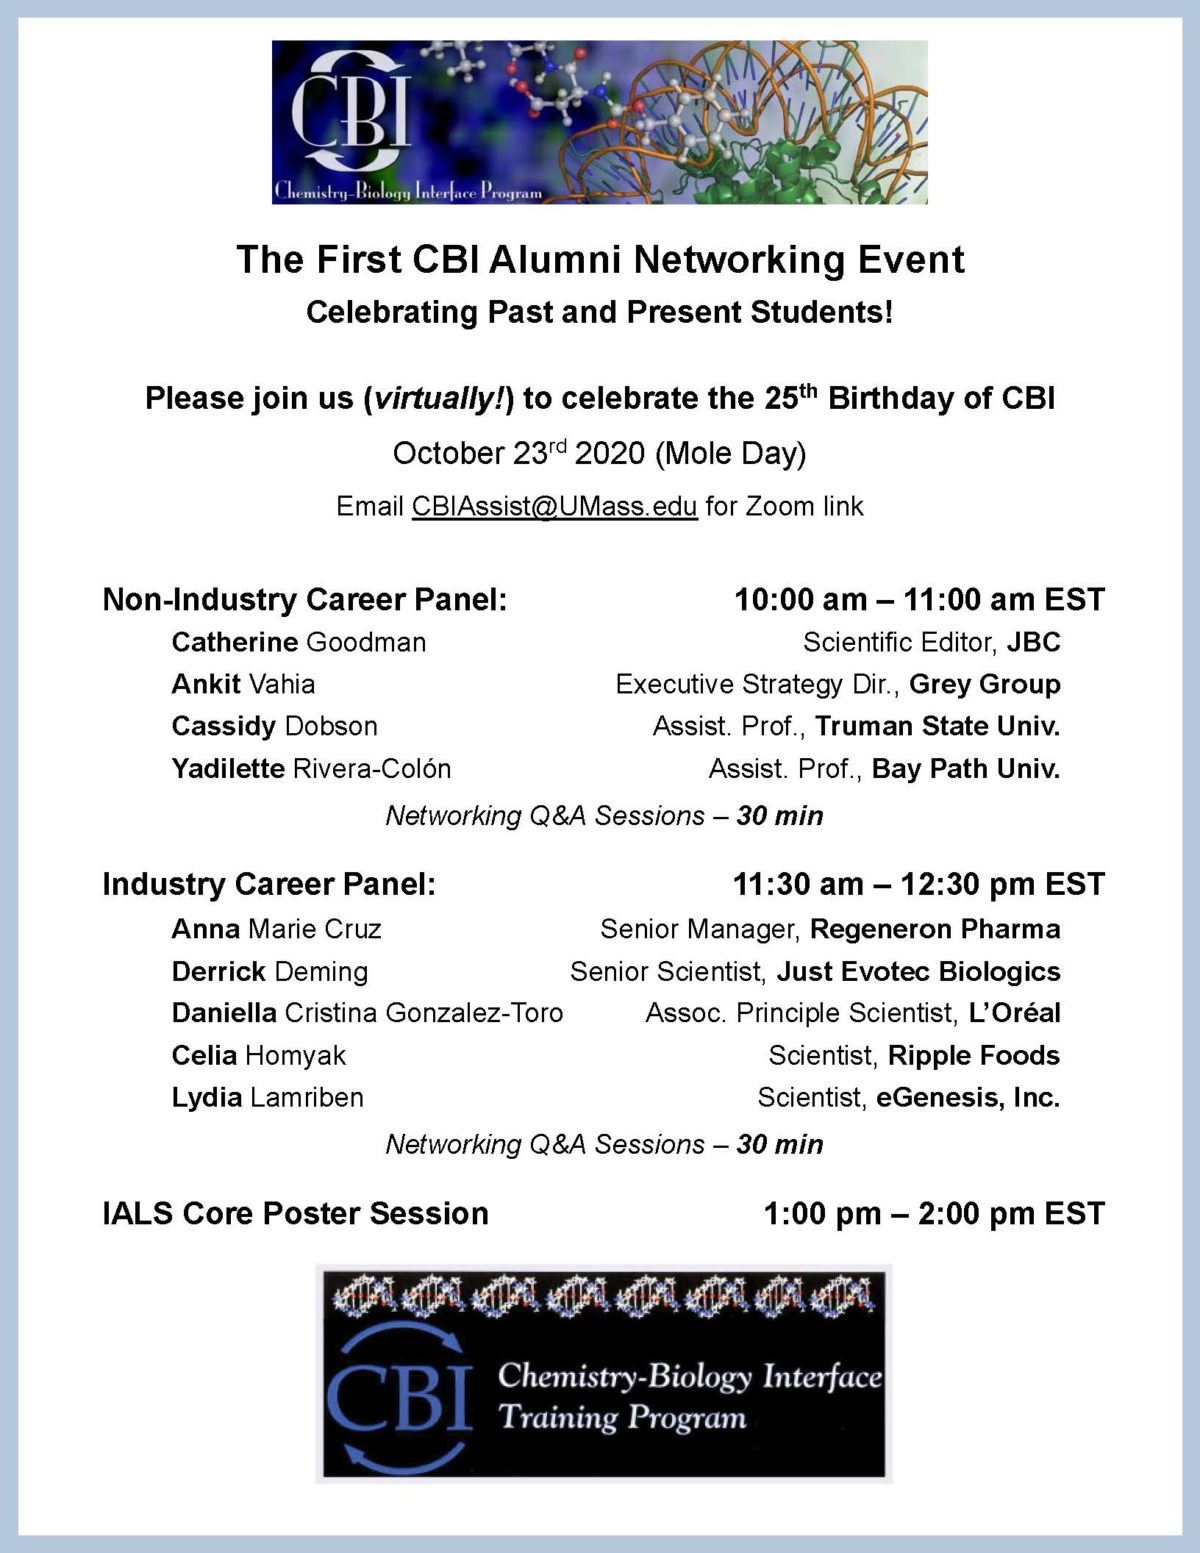 Oct 23: CBI Alumni Networking Event